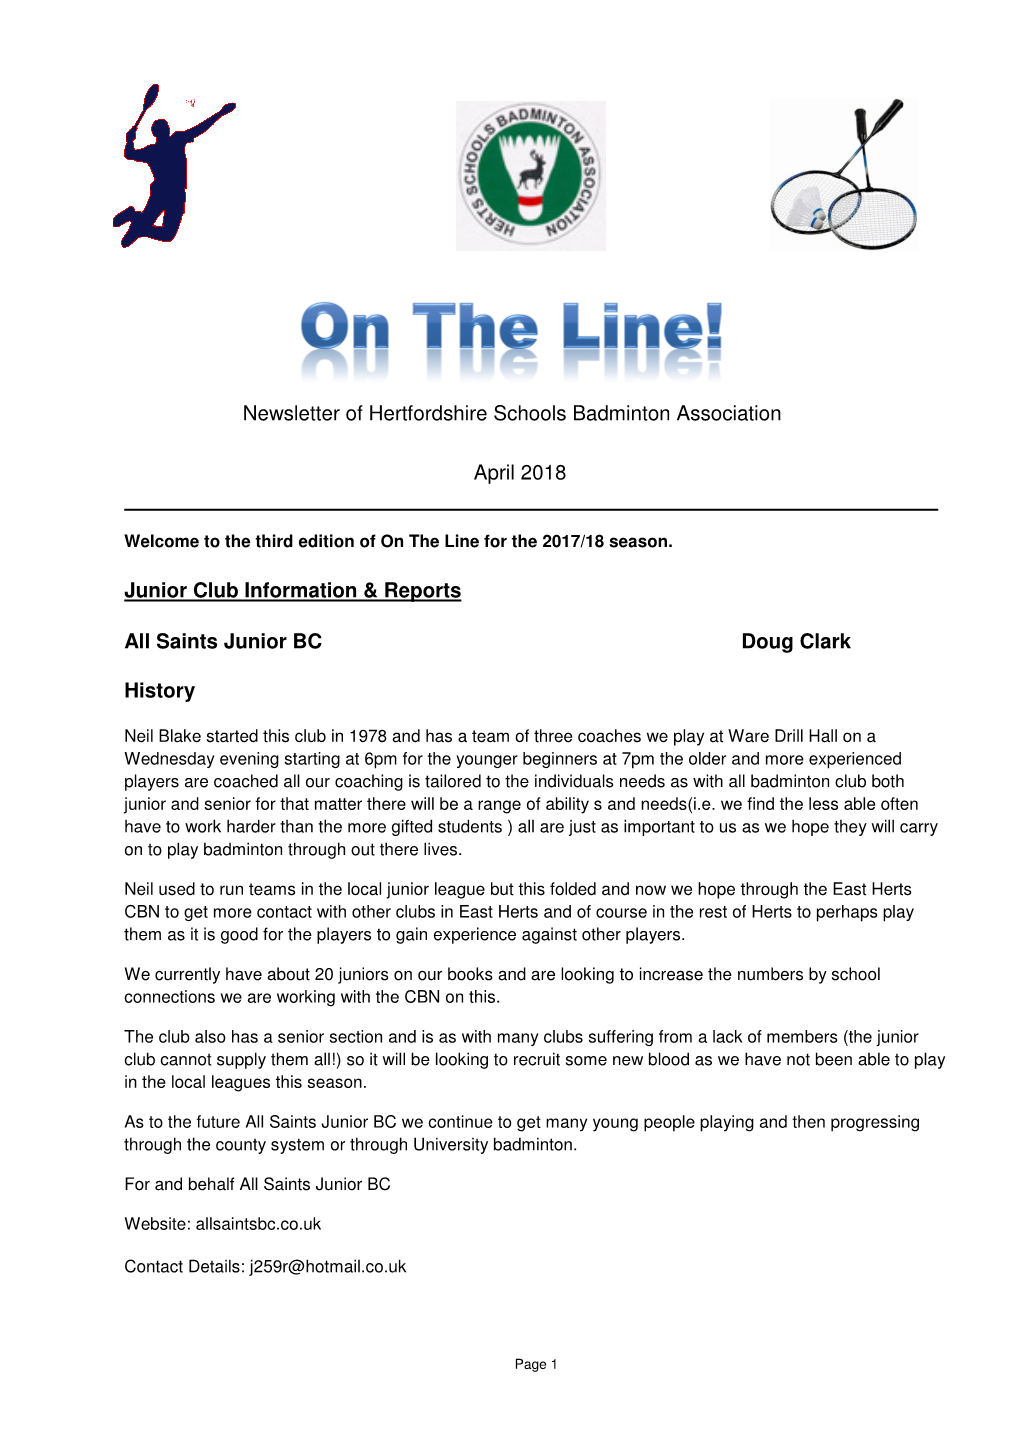 Newsletter of Hertfordshire Schools Badminton Association April 2018